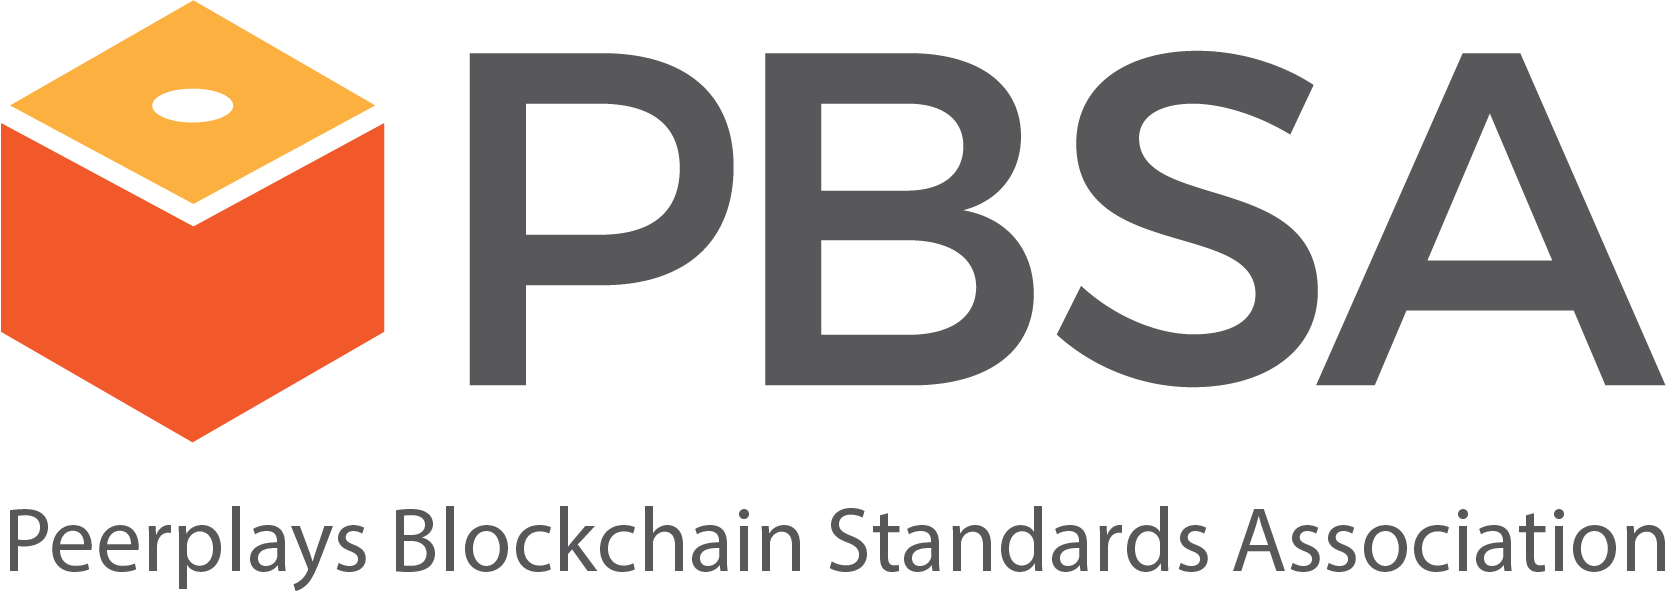 Peerplays Blockchain Standards Association Logo